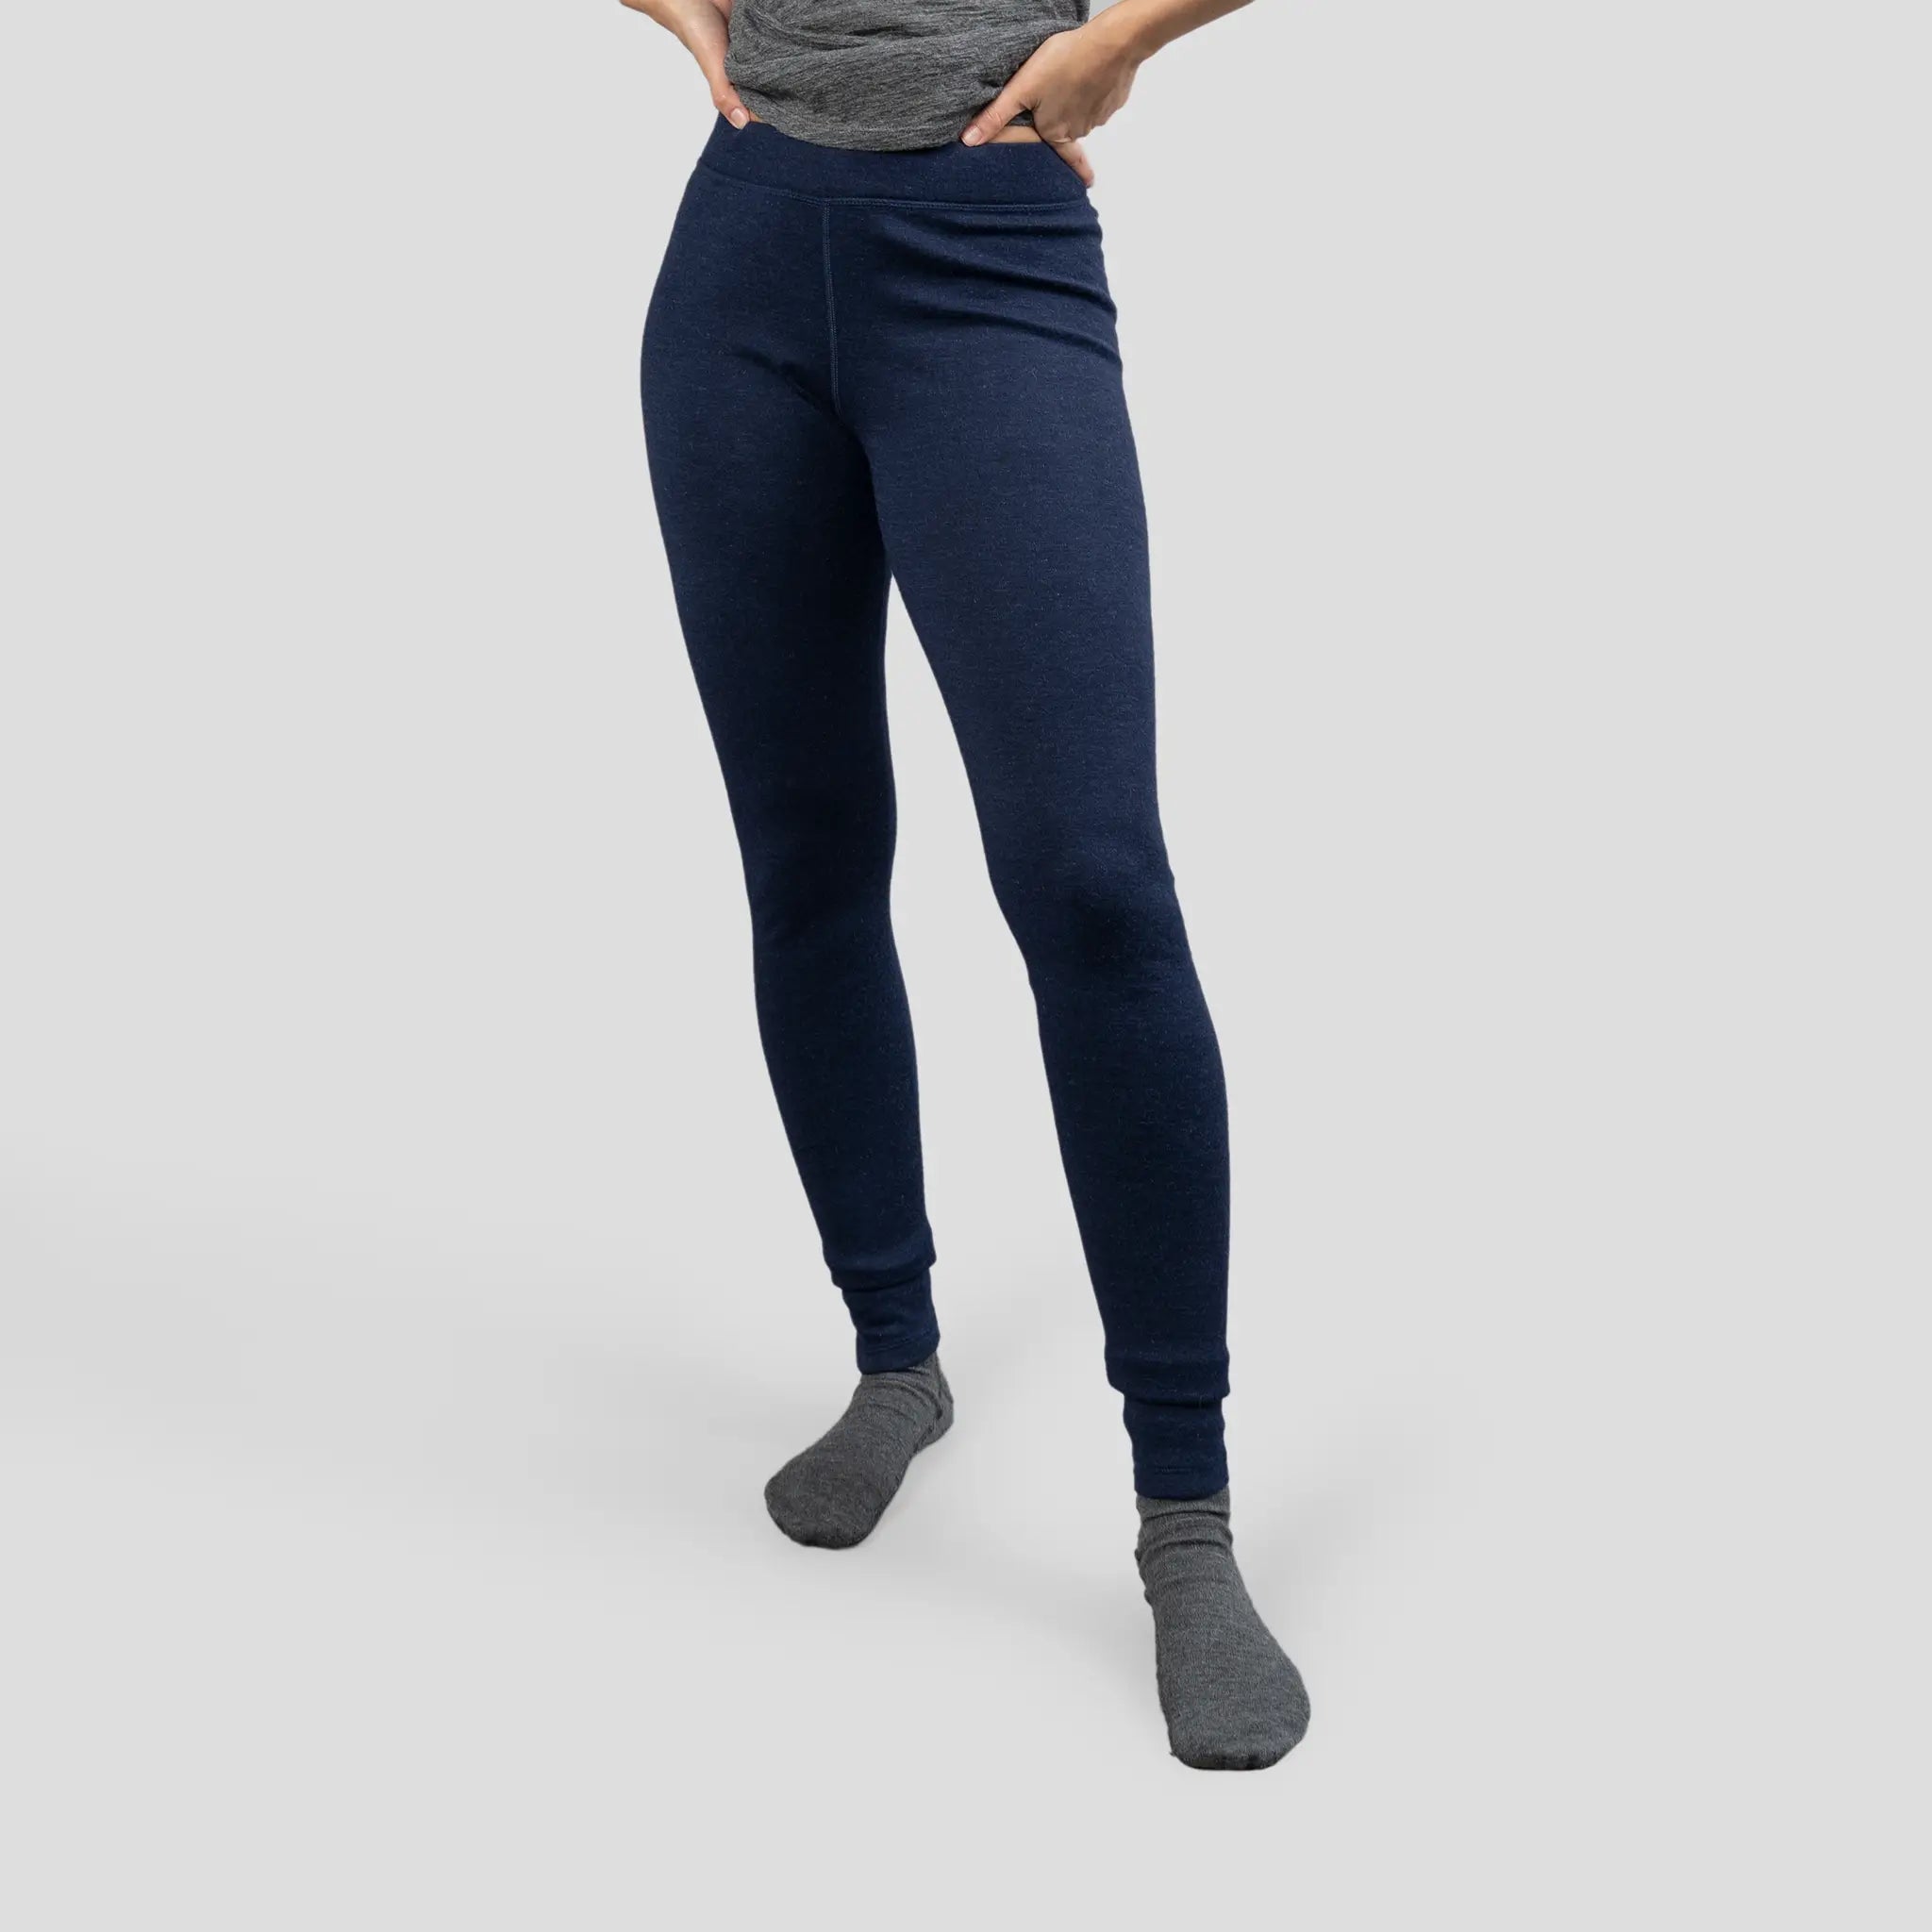 Women's Alpaca Wool Leggings: 300 Lightweight color navy blue